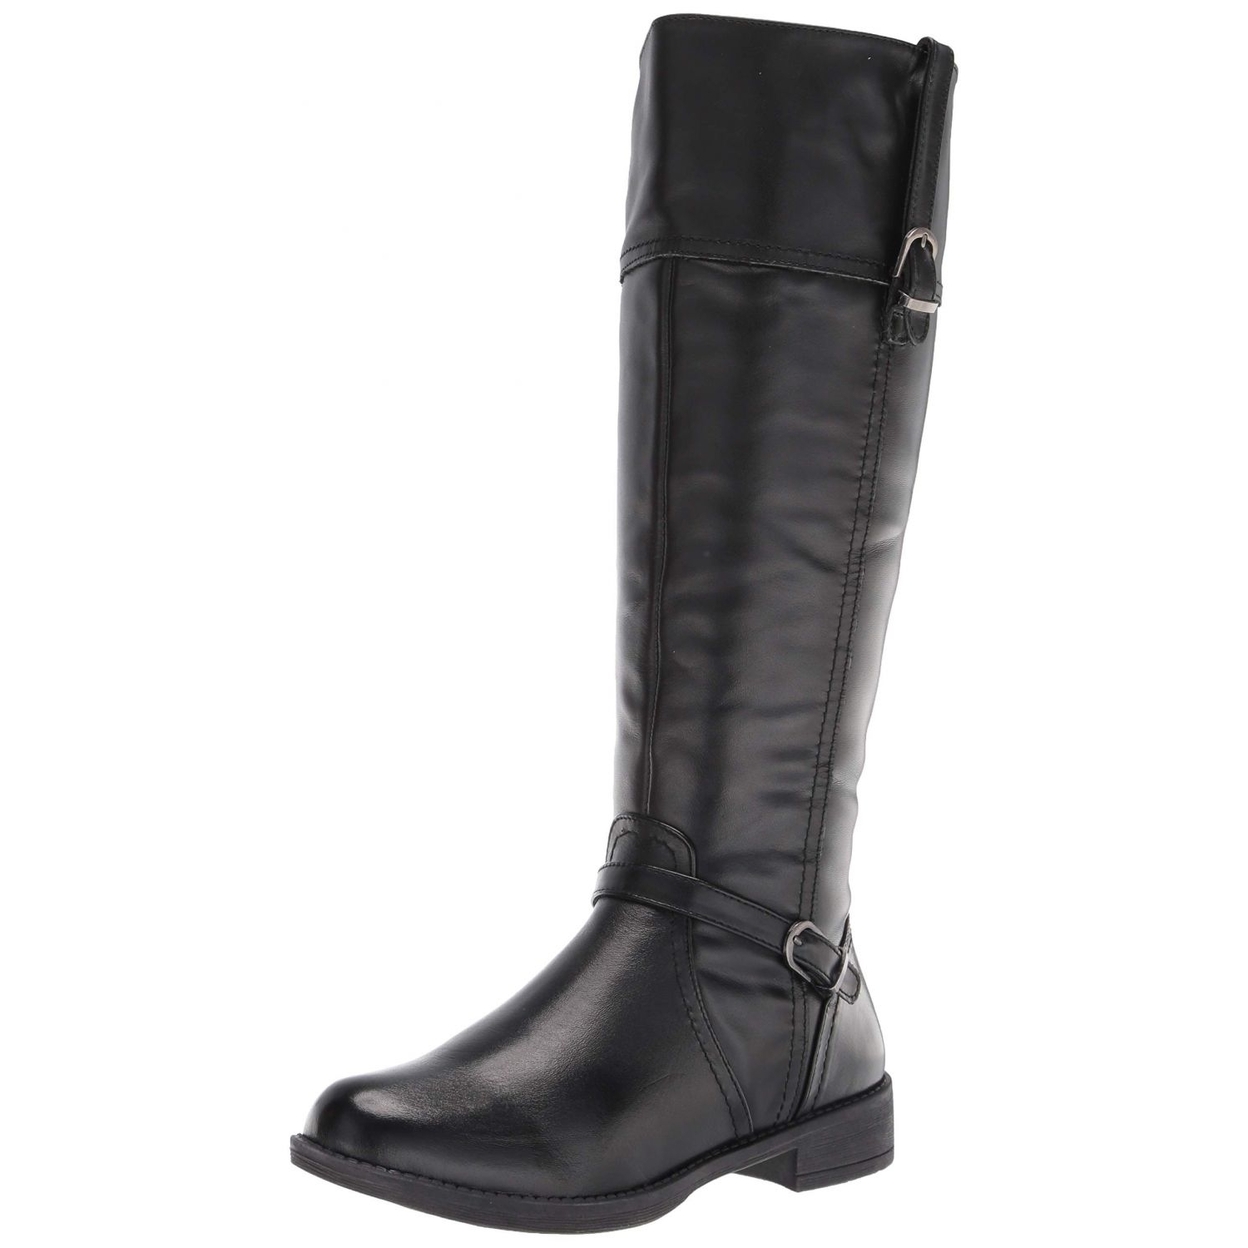 Propet Womens Tasha Zippered Casual Boots Knee High Low Heel 1-2 - Black BROWN - BROWN, 7.5 X-Wide